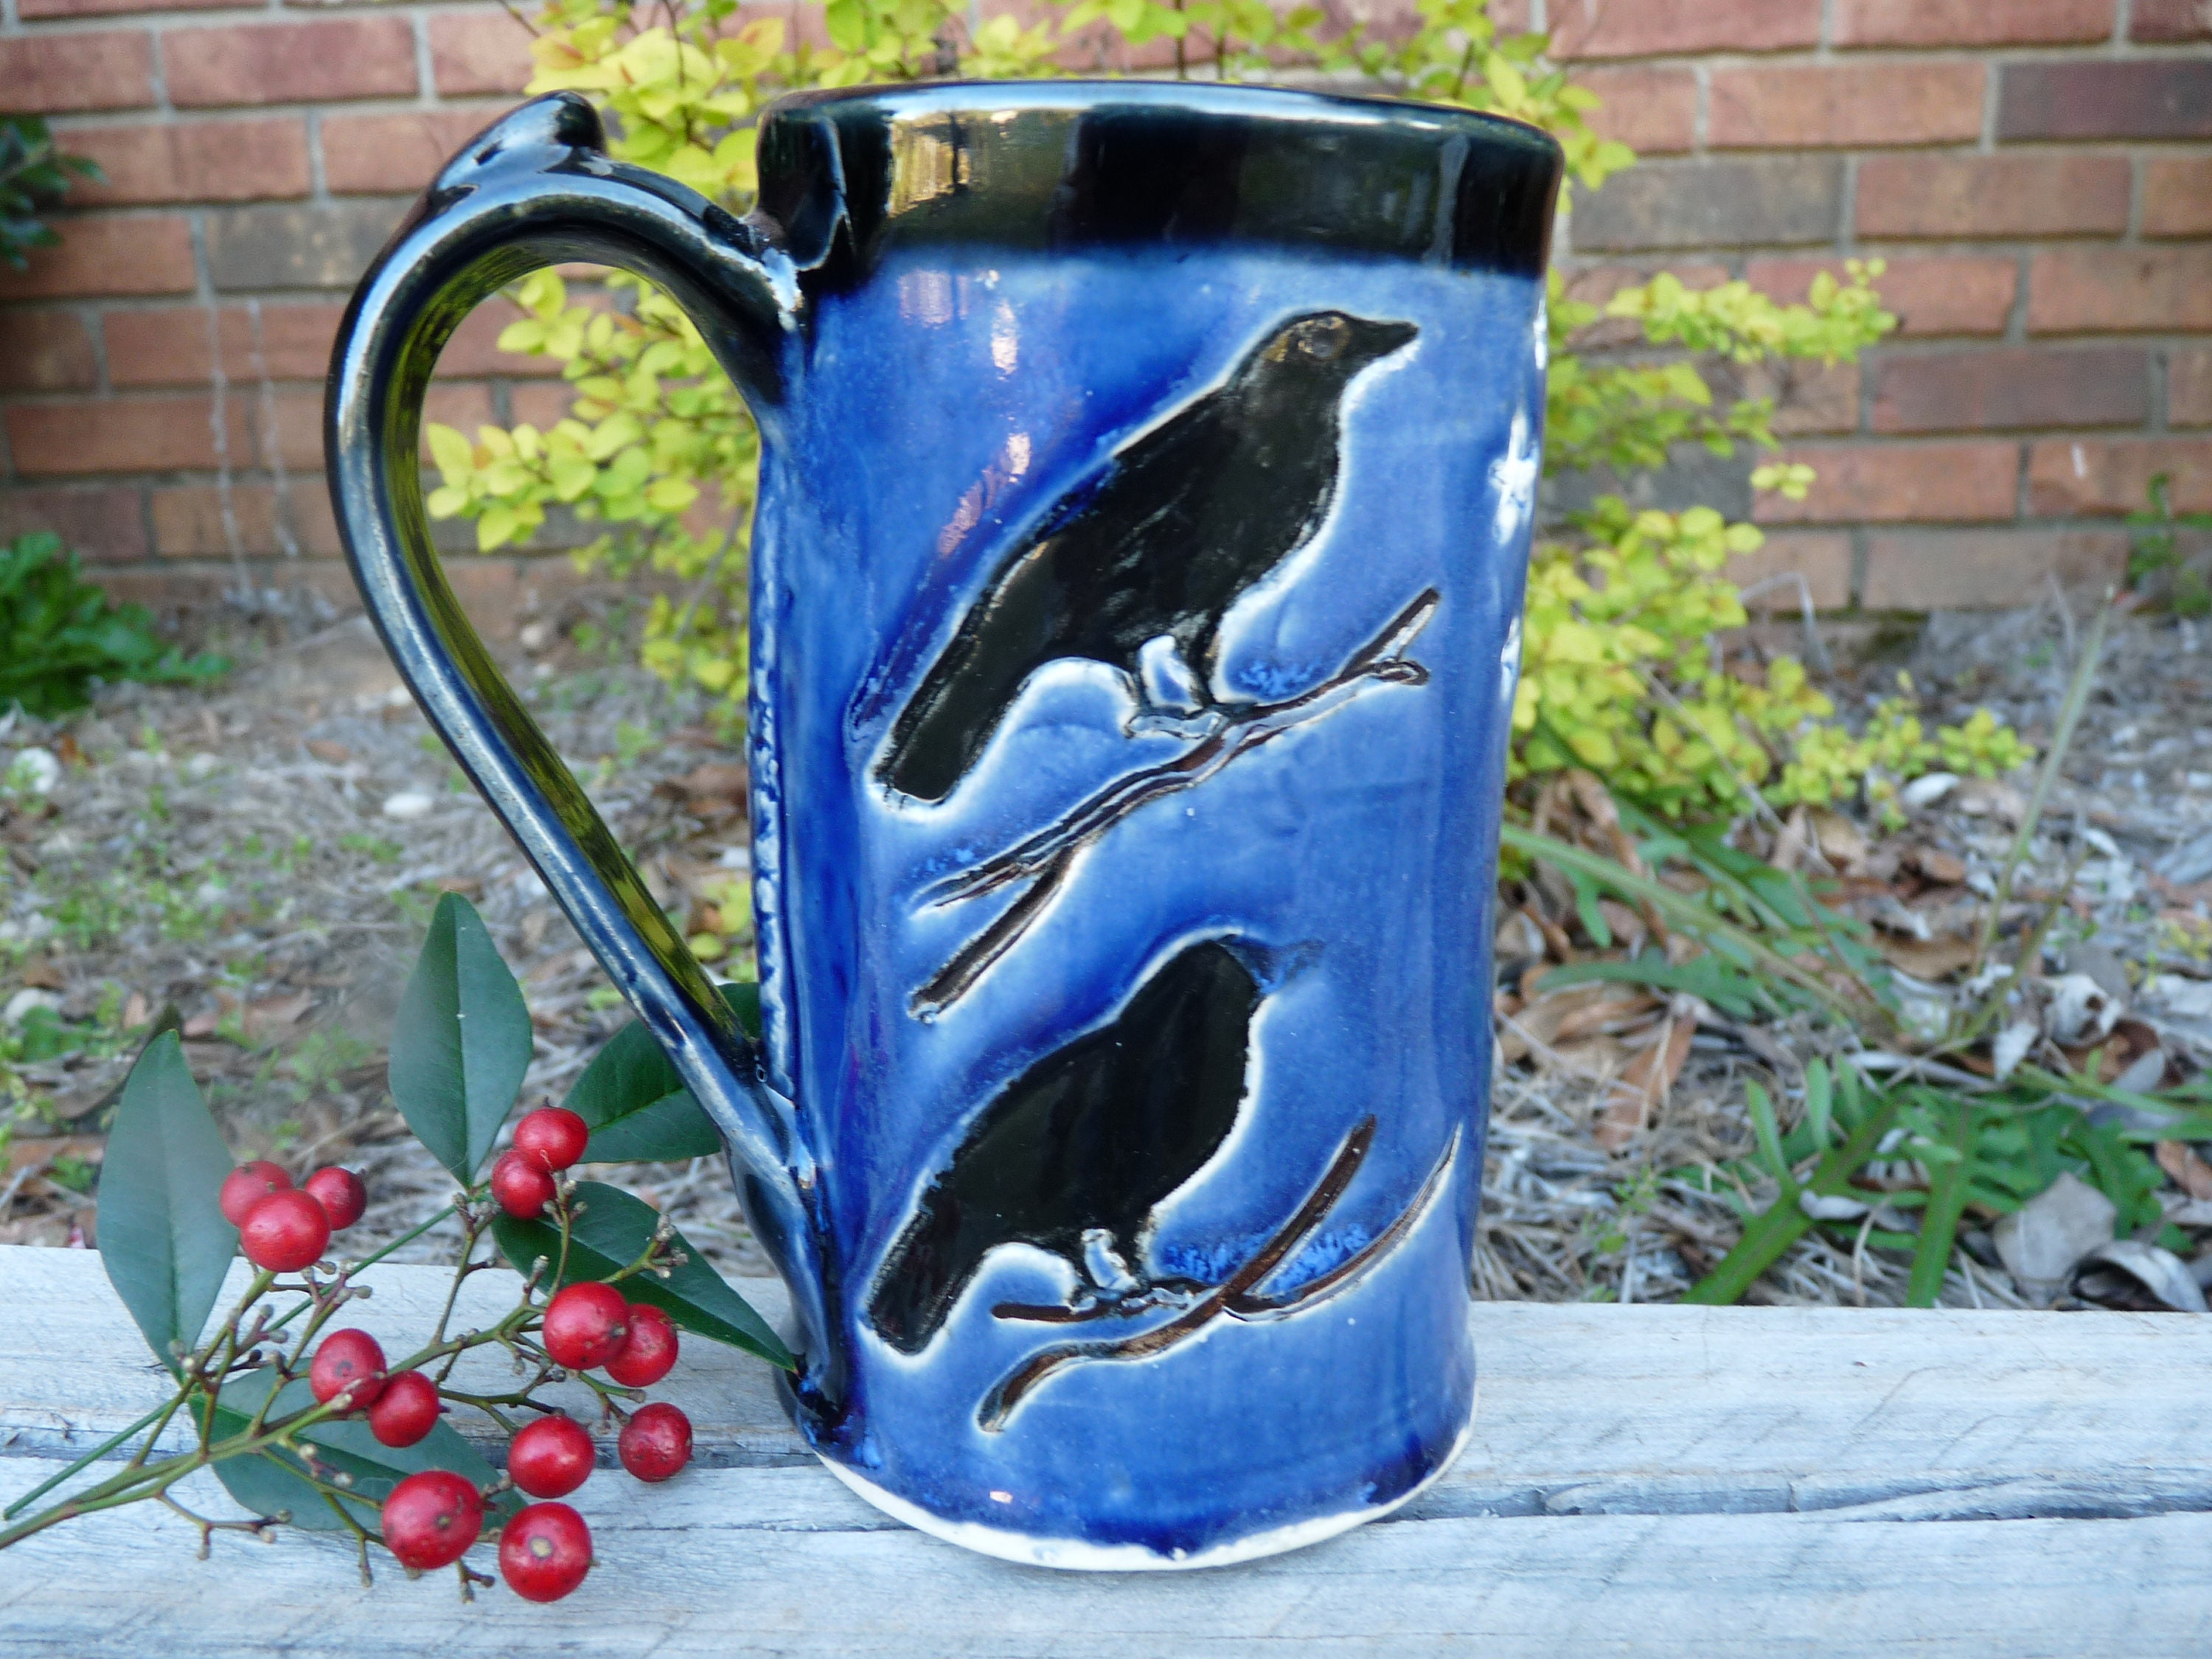 Handmade Pottery Tall Slender Mug